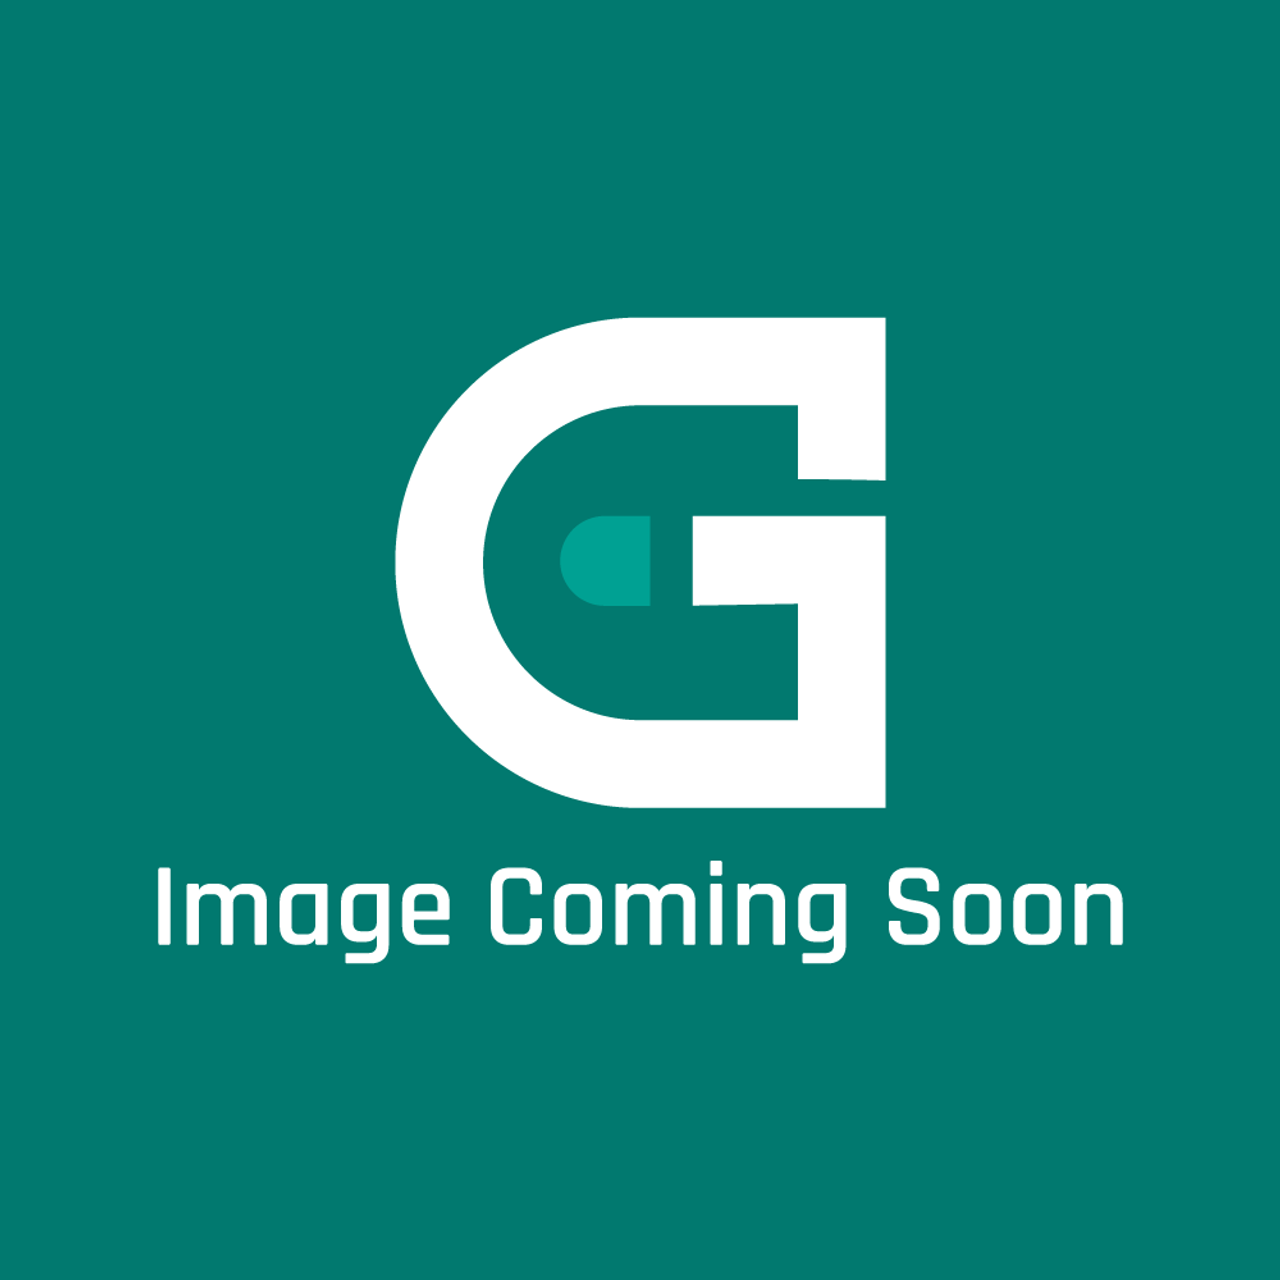 GE Appliances WB28T10237 - Gas Range Conversion Kit (Butane) - Image Coming Soon!